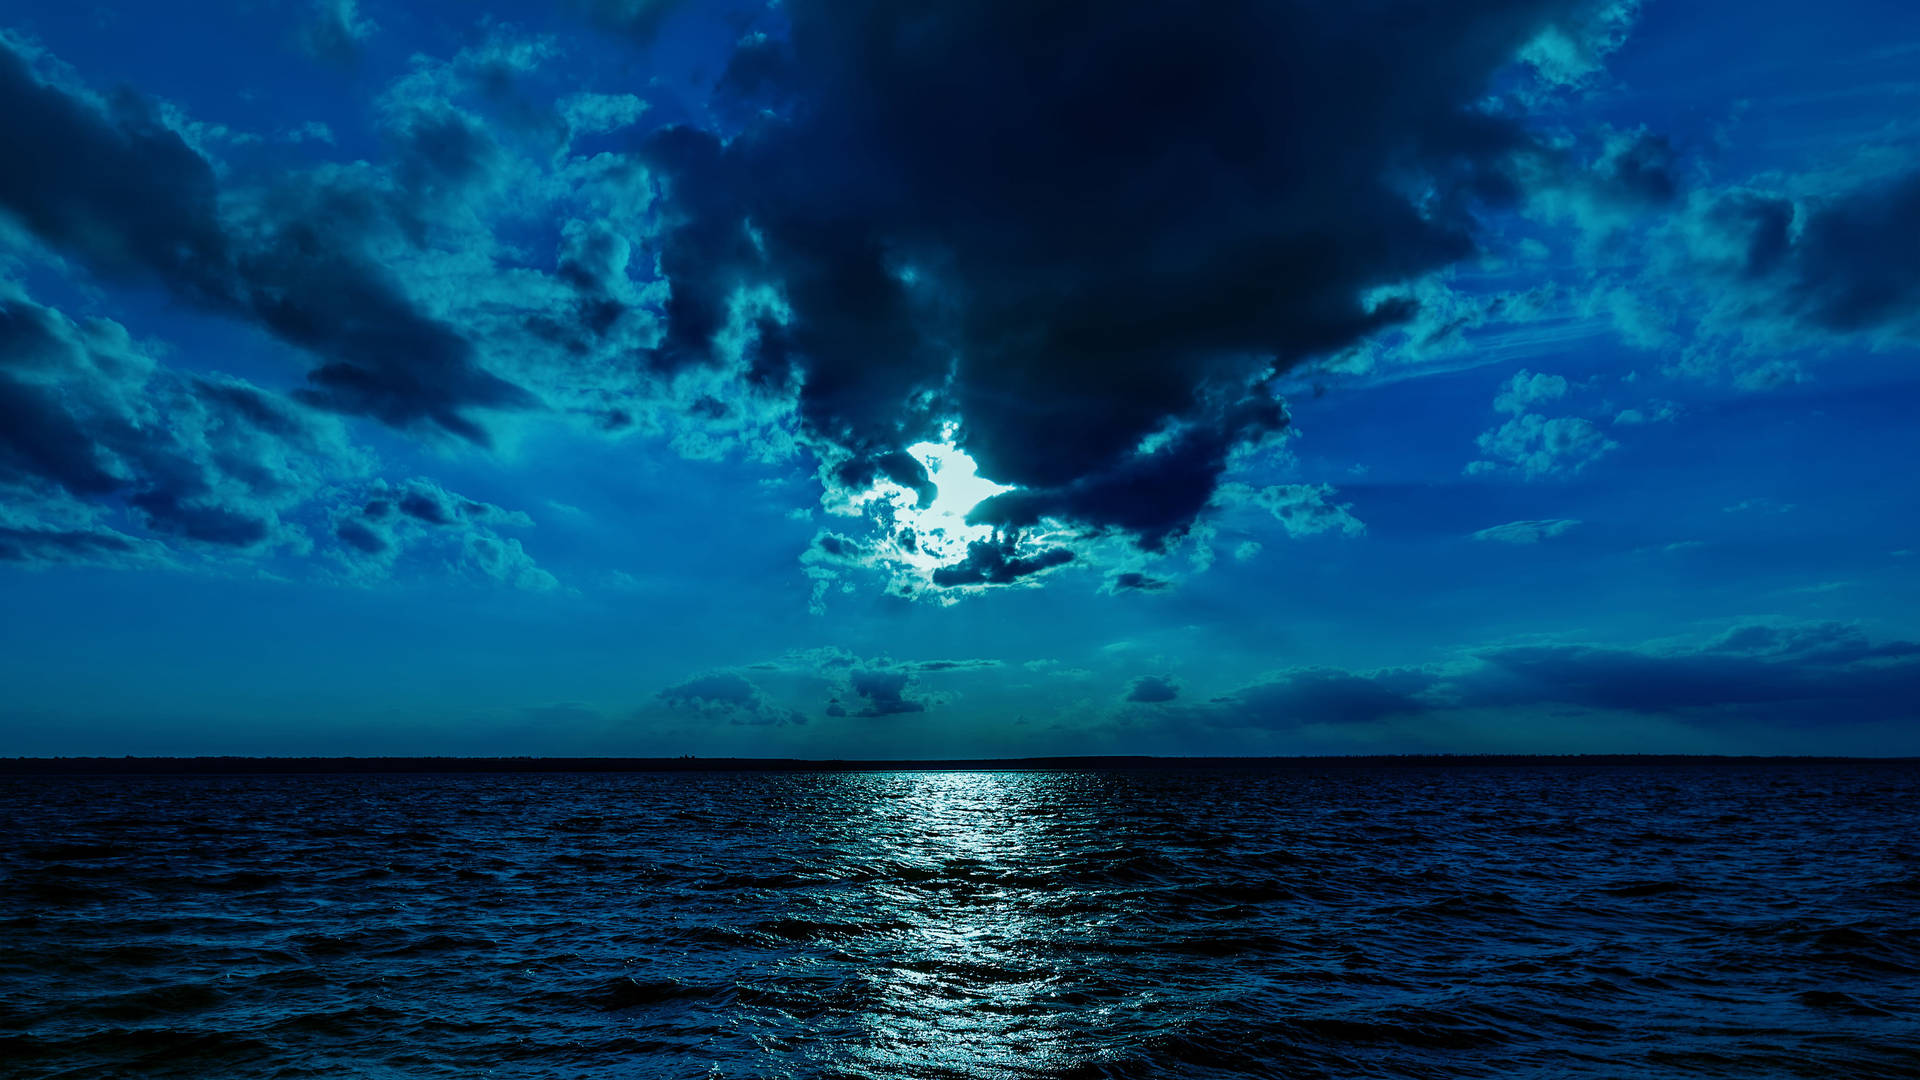 Body Of Water Under Moonlight 4k Background